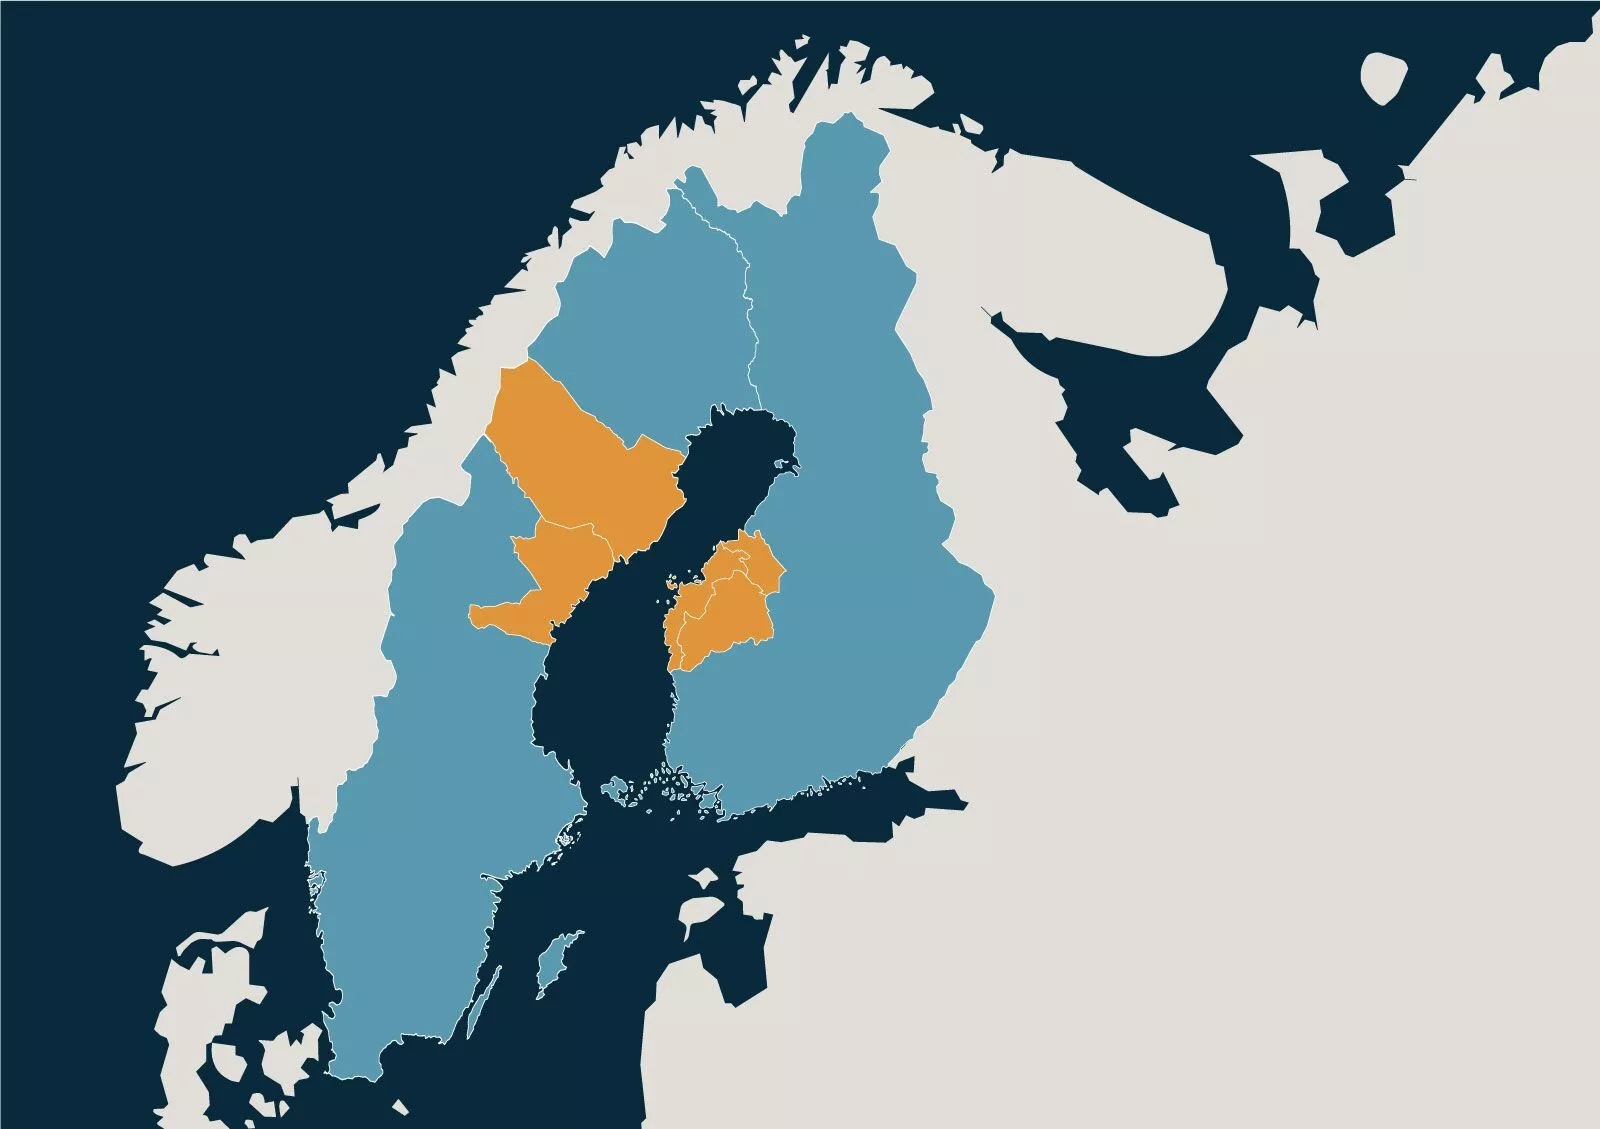 Map highlighting the Kvarken region across Sweden and Finland